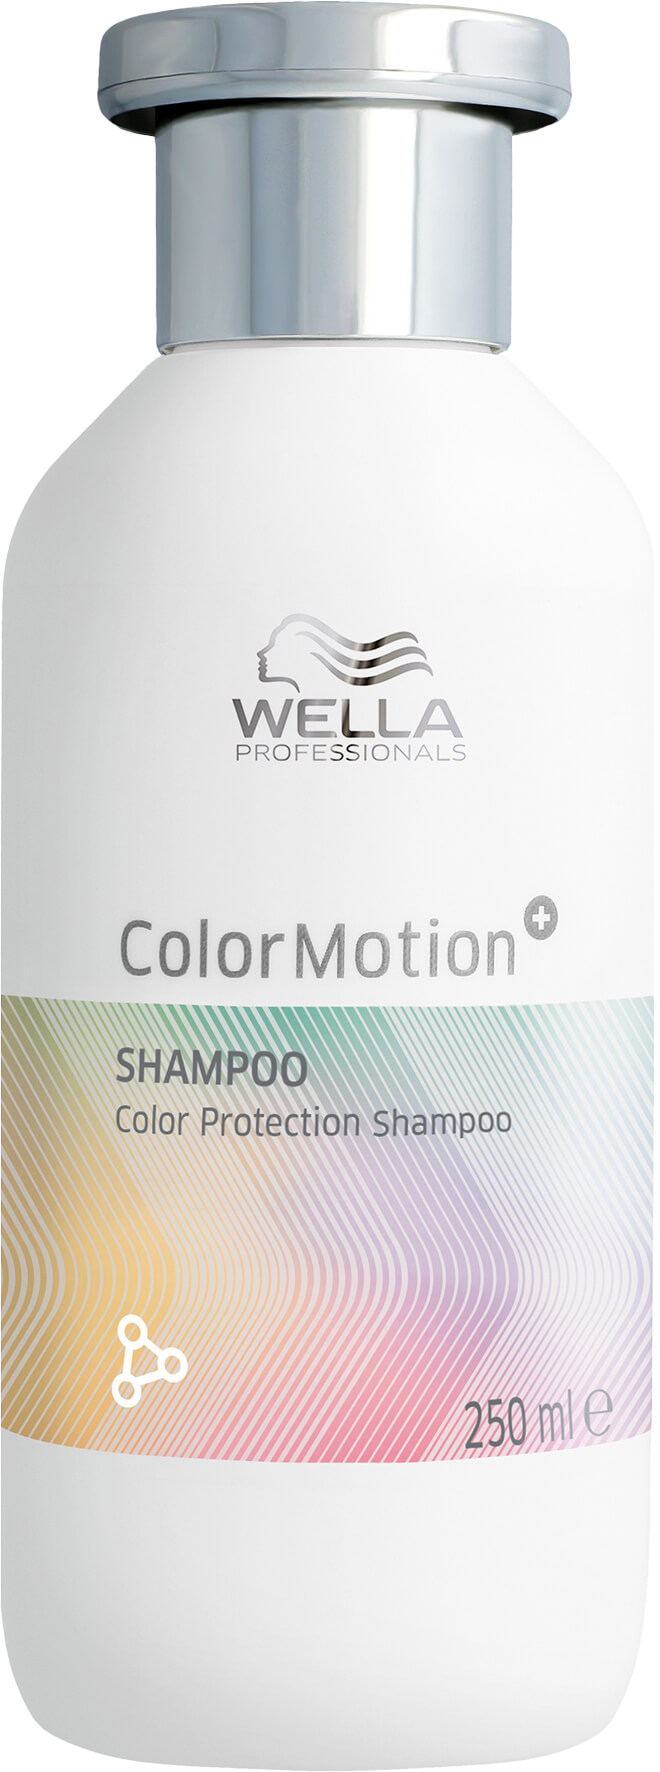 Wella ColorMotion+ Farbschutz-Shampoo 